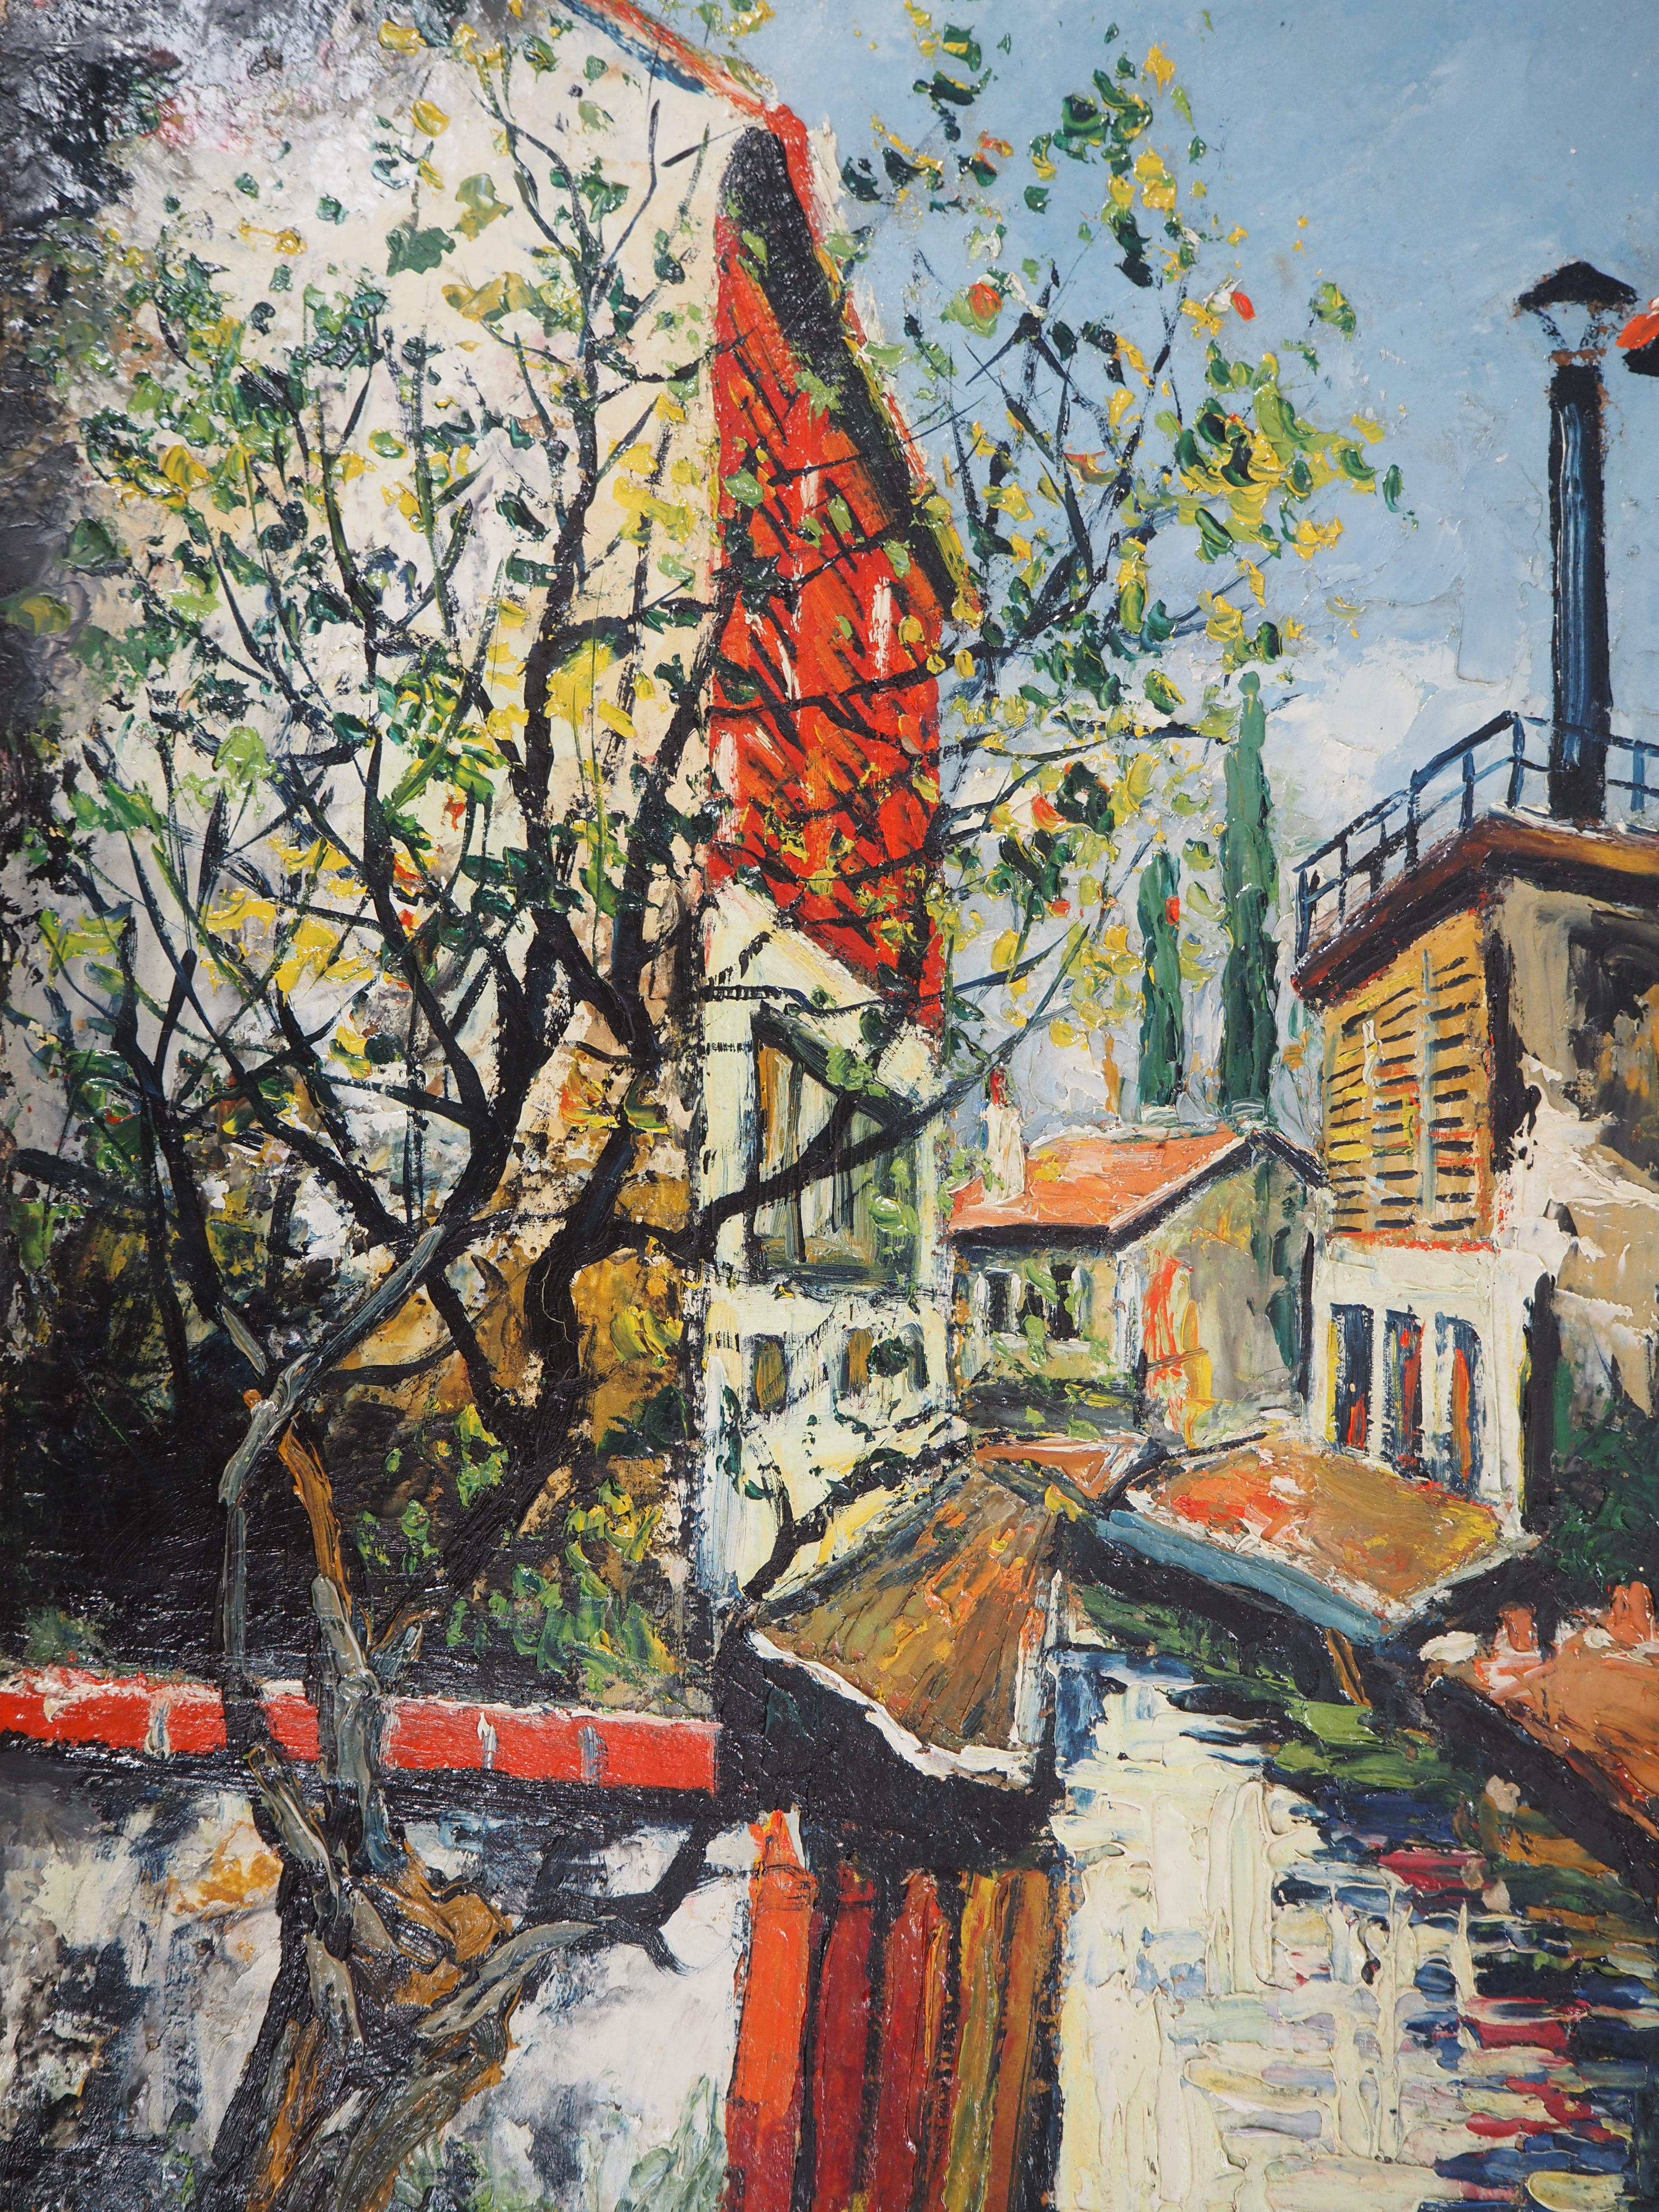 Elisée MACLET (1881-1962)
Paris : Small Houses Near Bievre River, c. 1920

Original oil on panel
Signed bottom left
On board 55 x 46 cm (c. 22 x 18